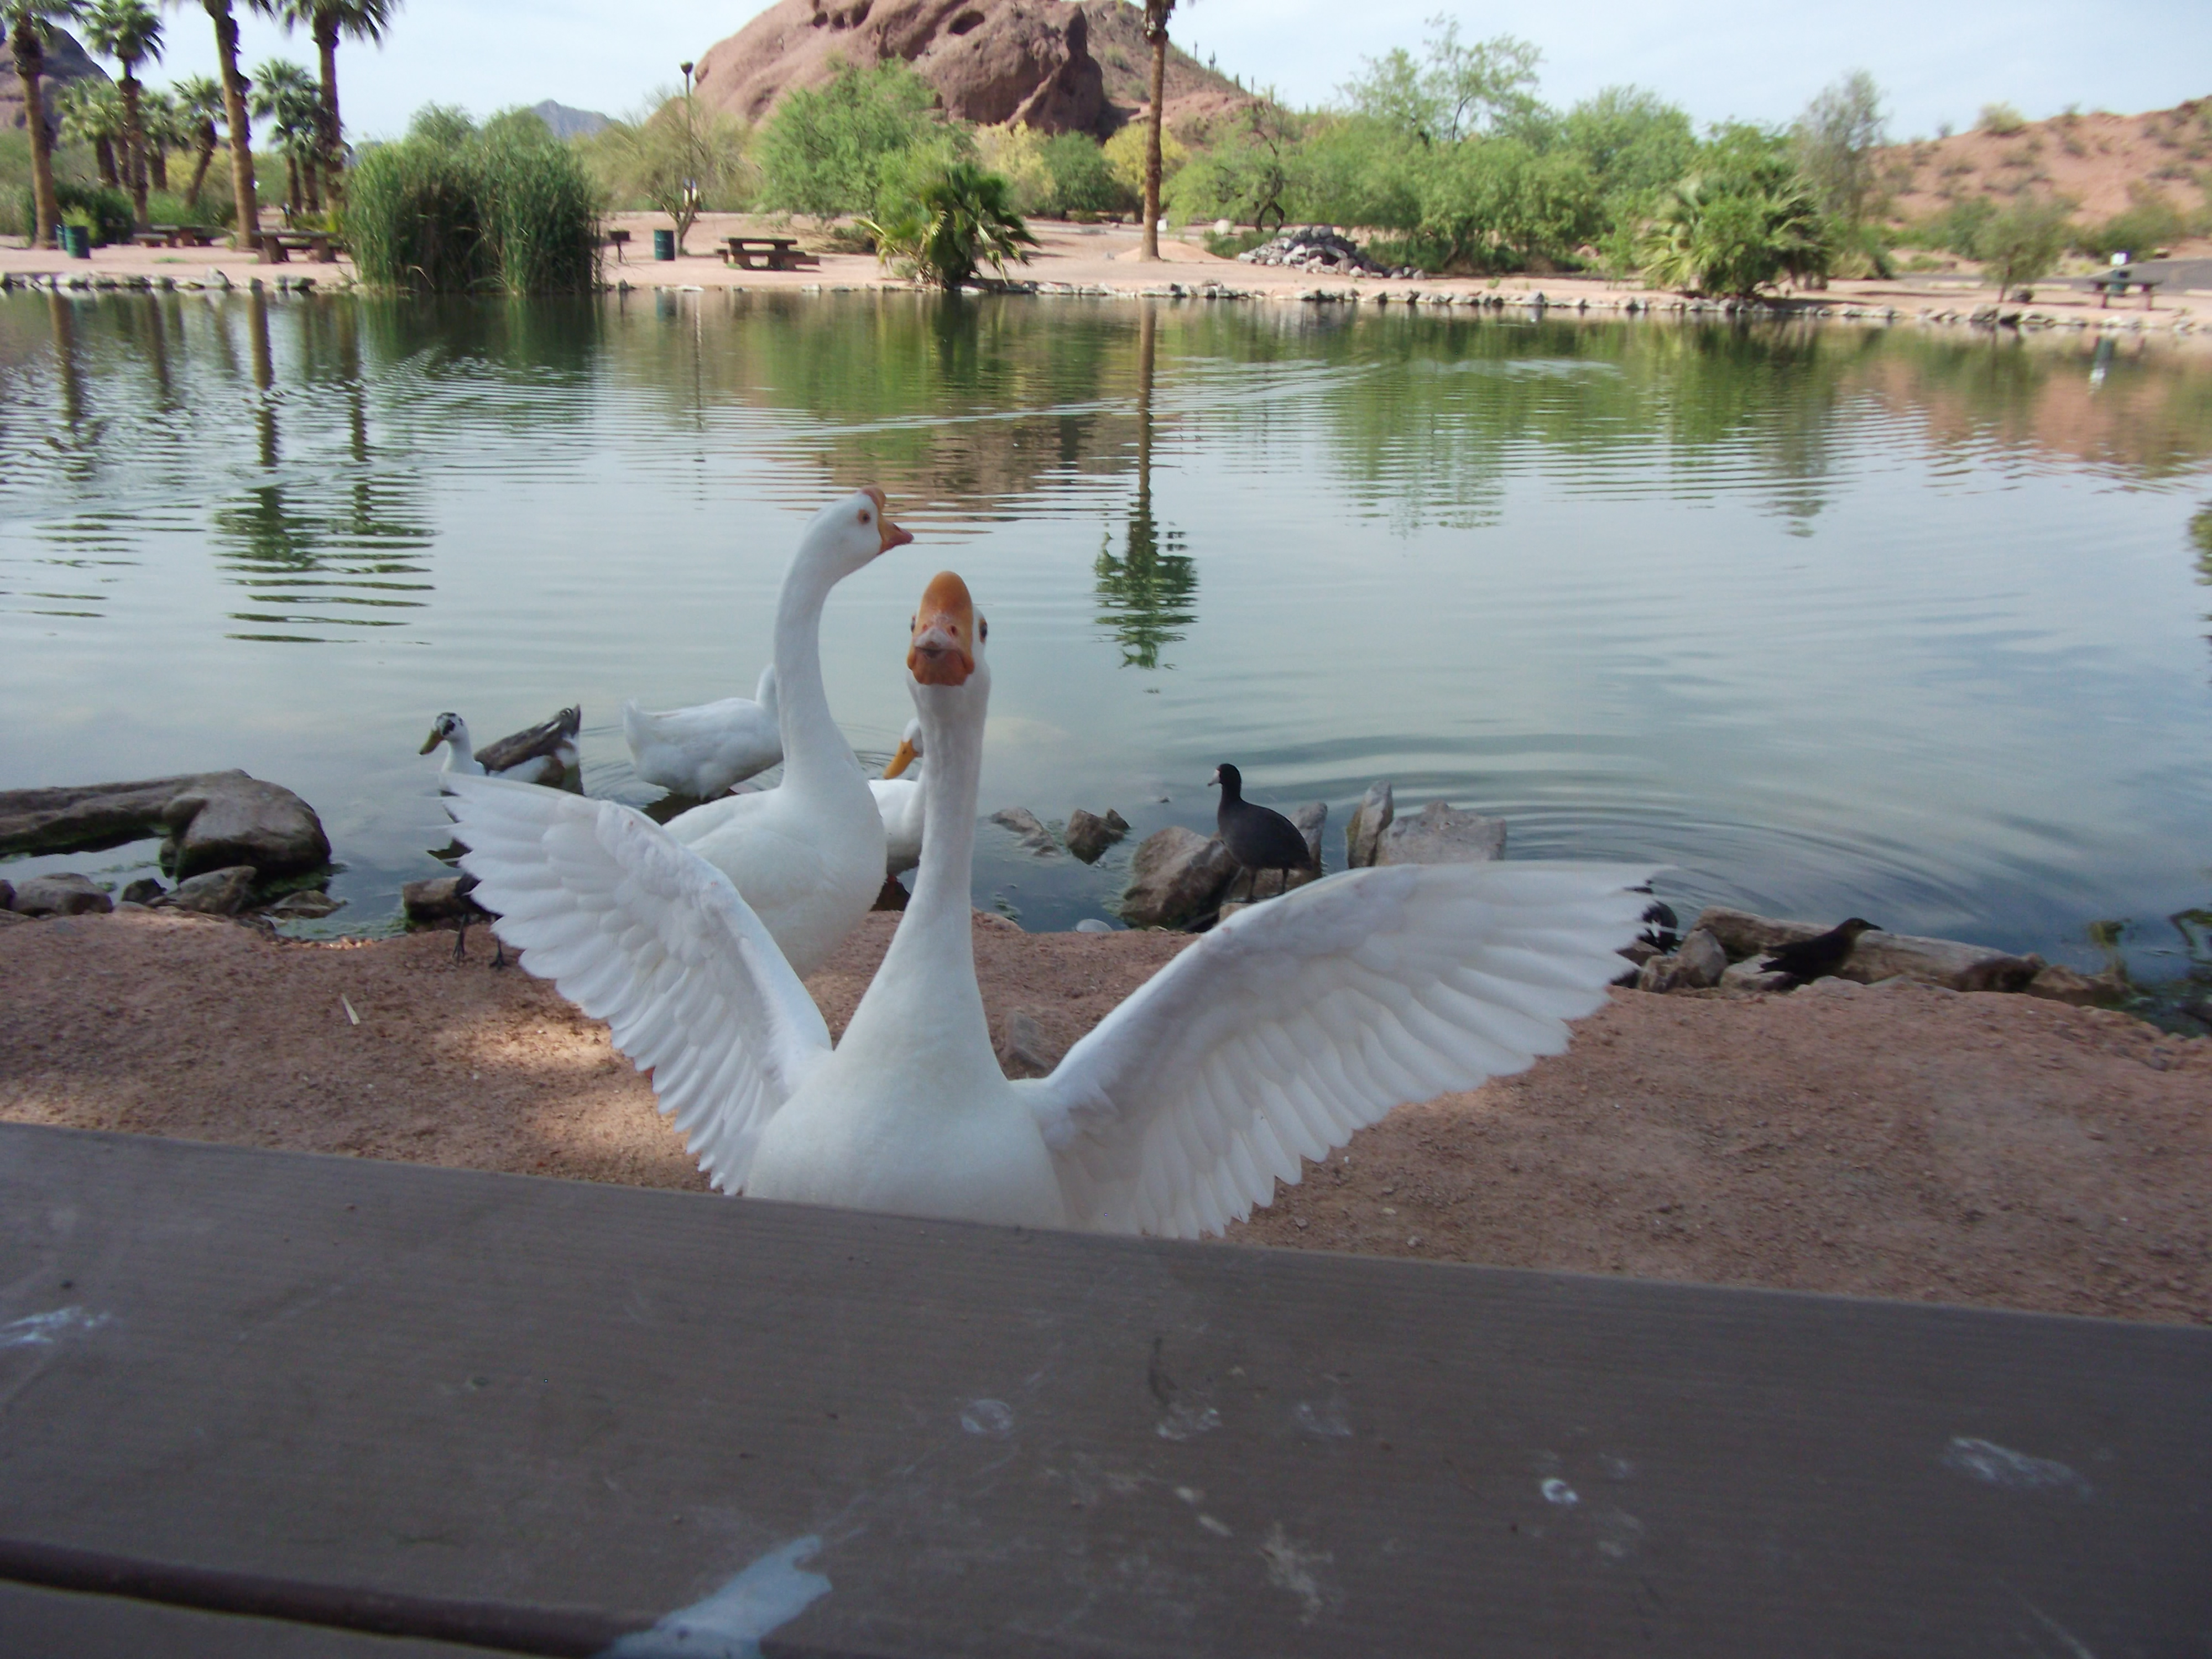 Papago Park Geese speard their Wings